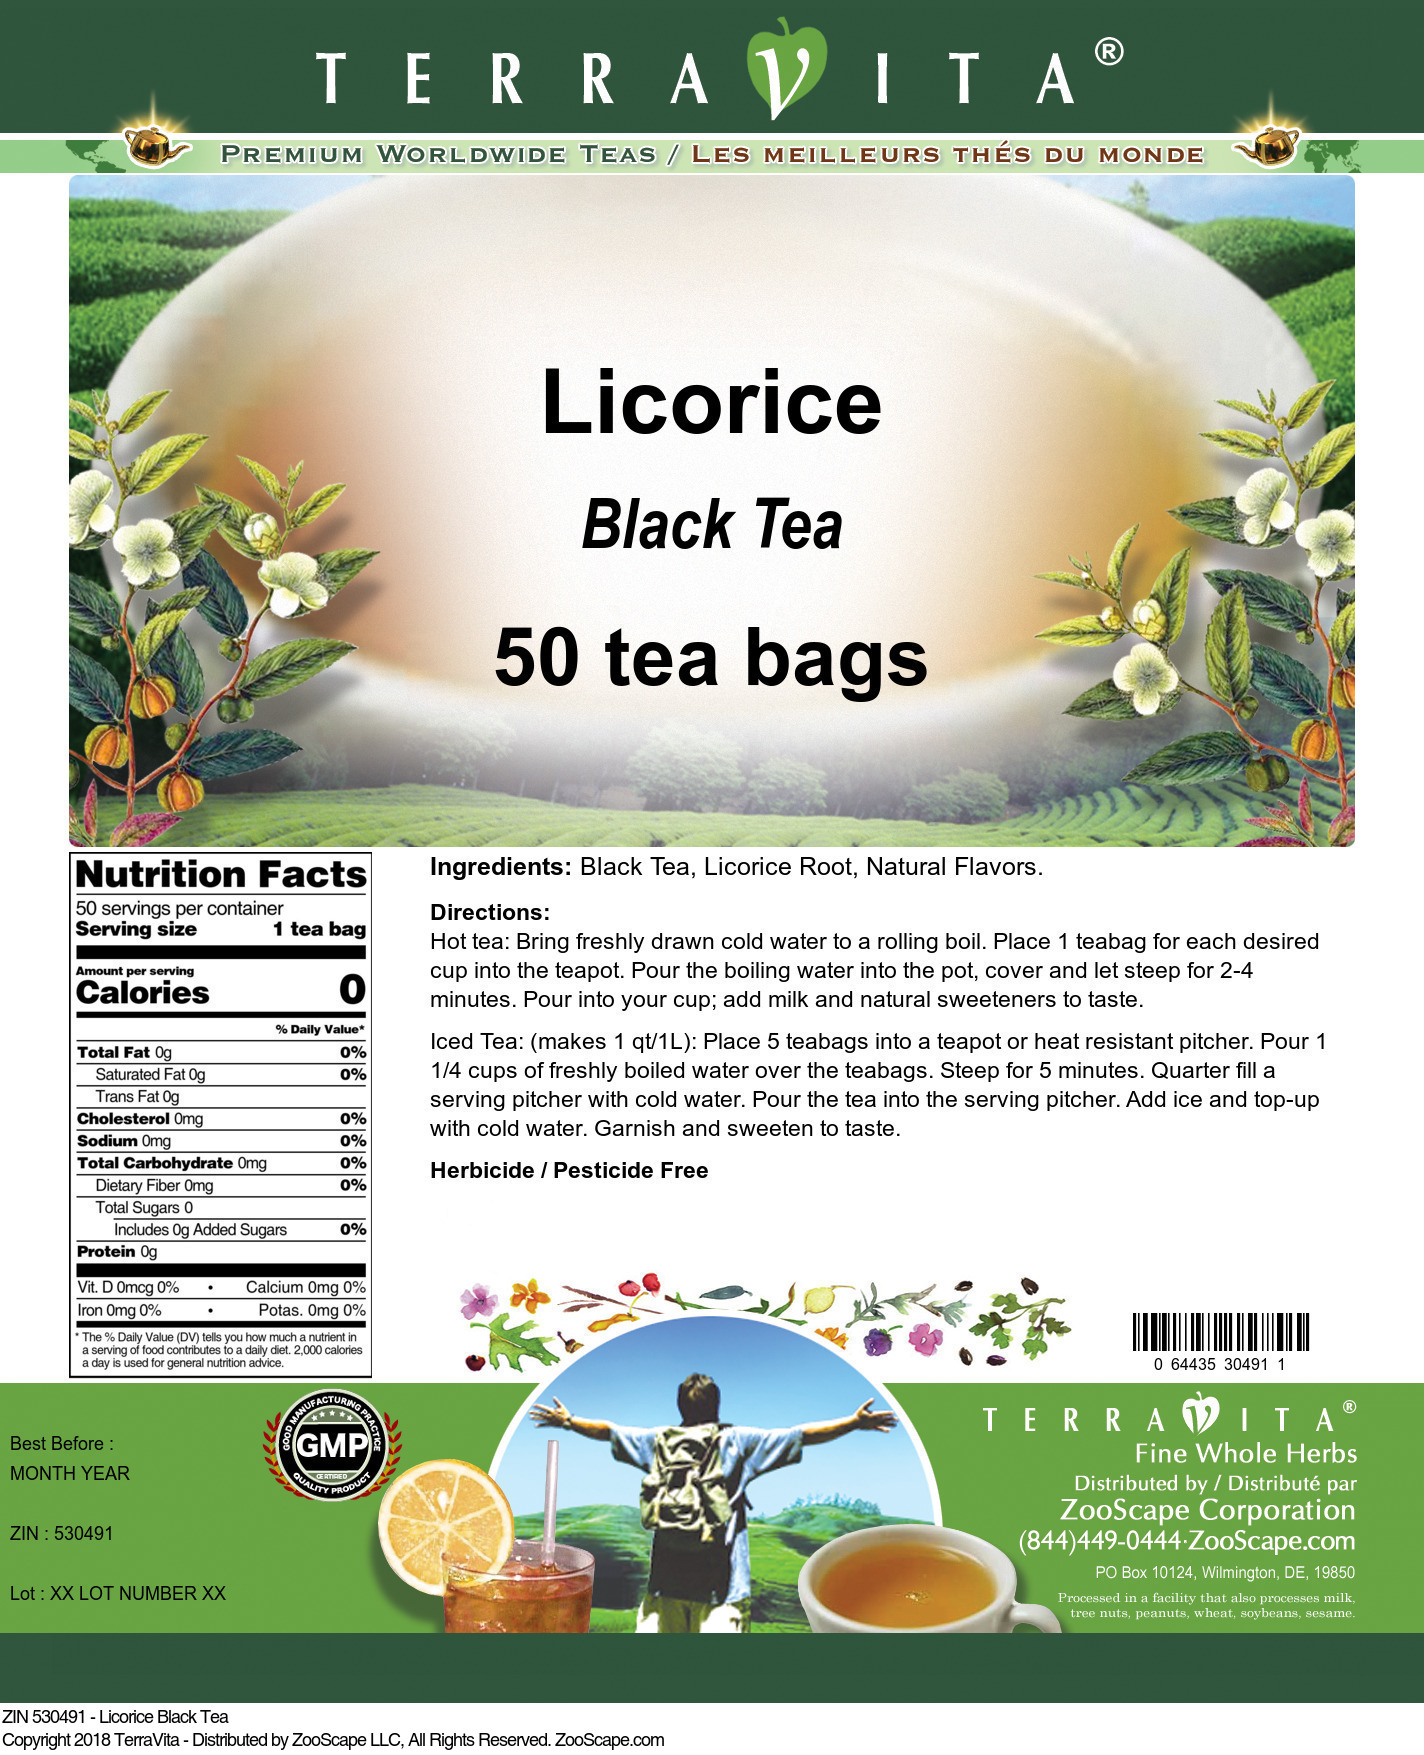 TerraVita Licorice Black Tea (50 tea bags, ZIN: 530491)